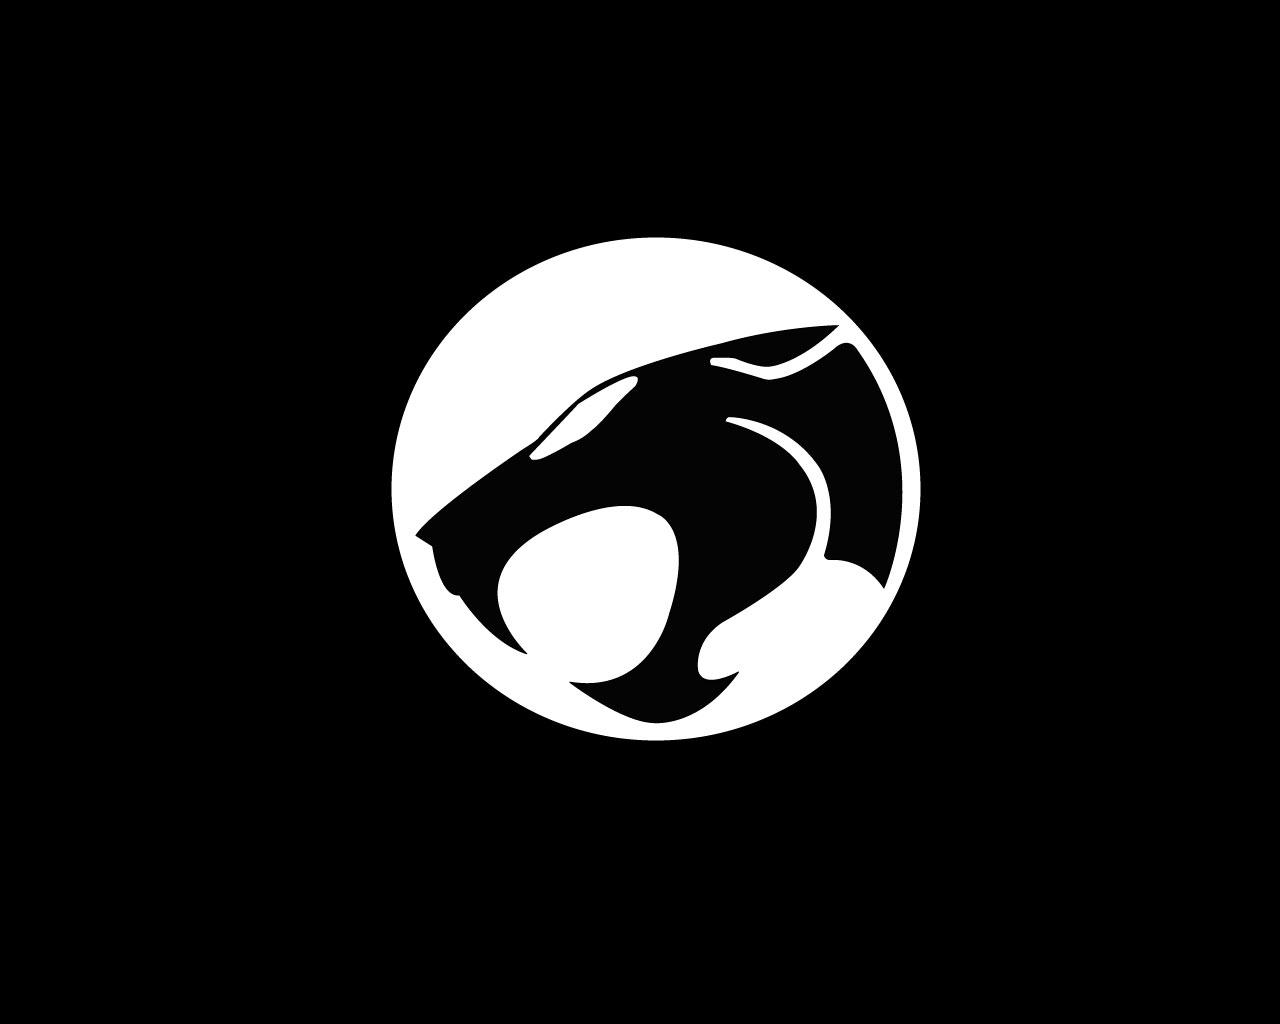 [73+] Thundercats Logo Wallpaper on WallpaperSafari